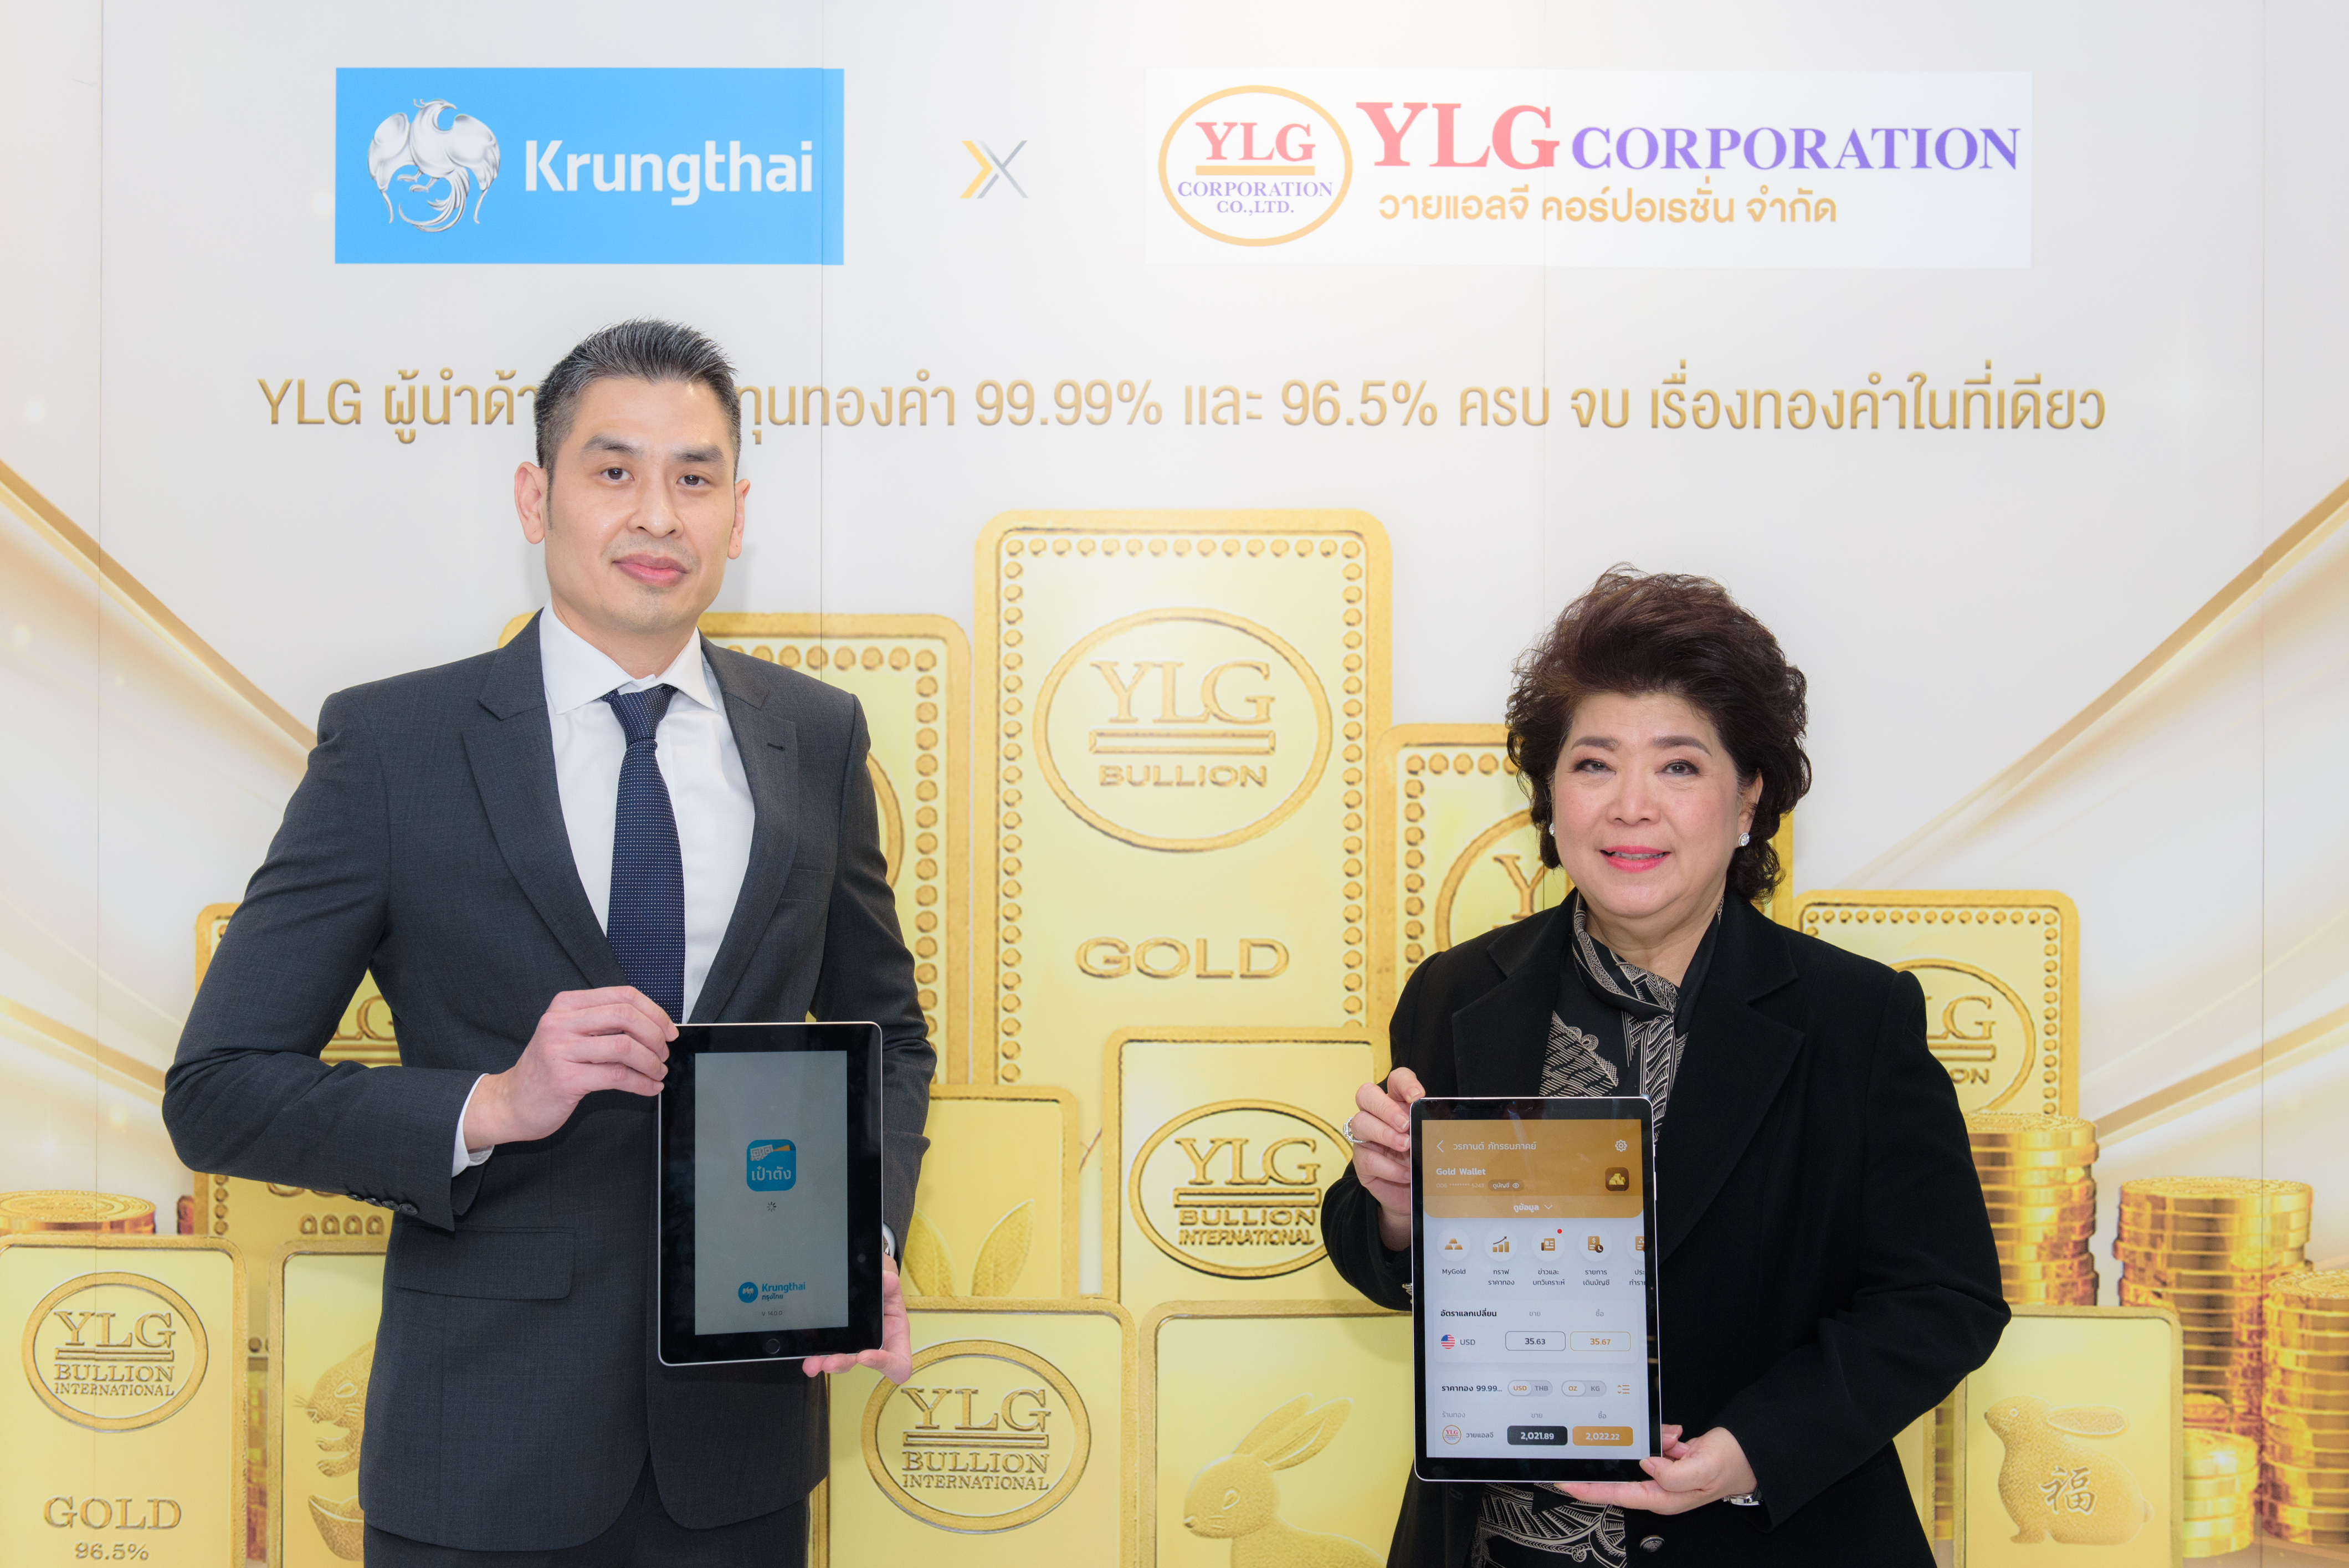 YLG x Krungthai ฉลองความสำเร็จบริการซื้อขายทองคำผ่าน Gold wallet บนแอปฯเป๋าตังยอดใช้งานพุ่ง